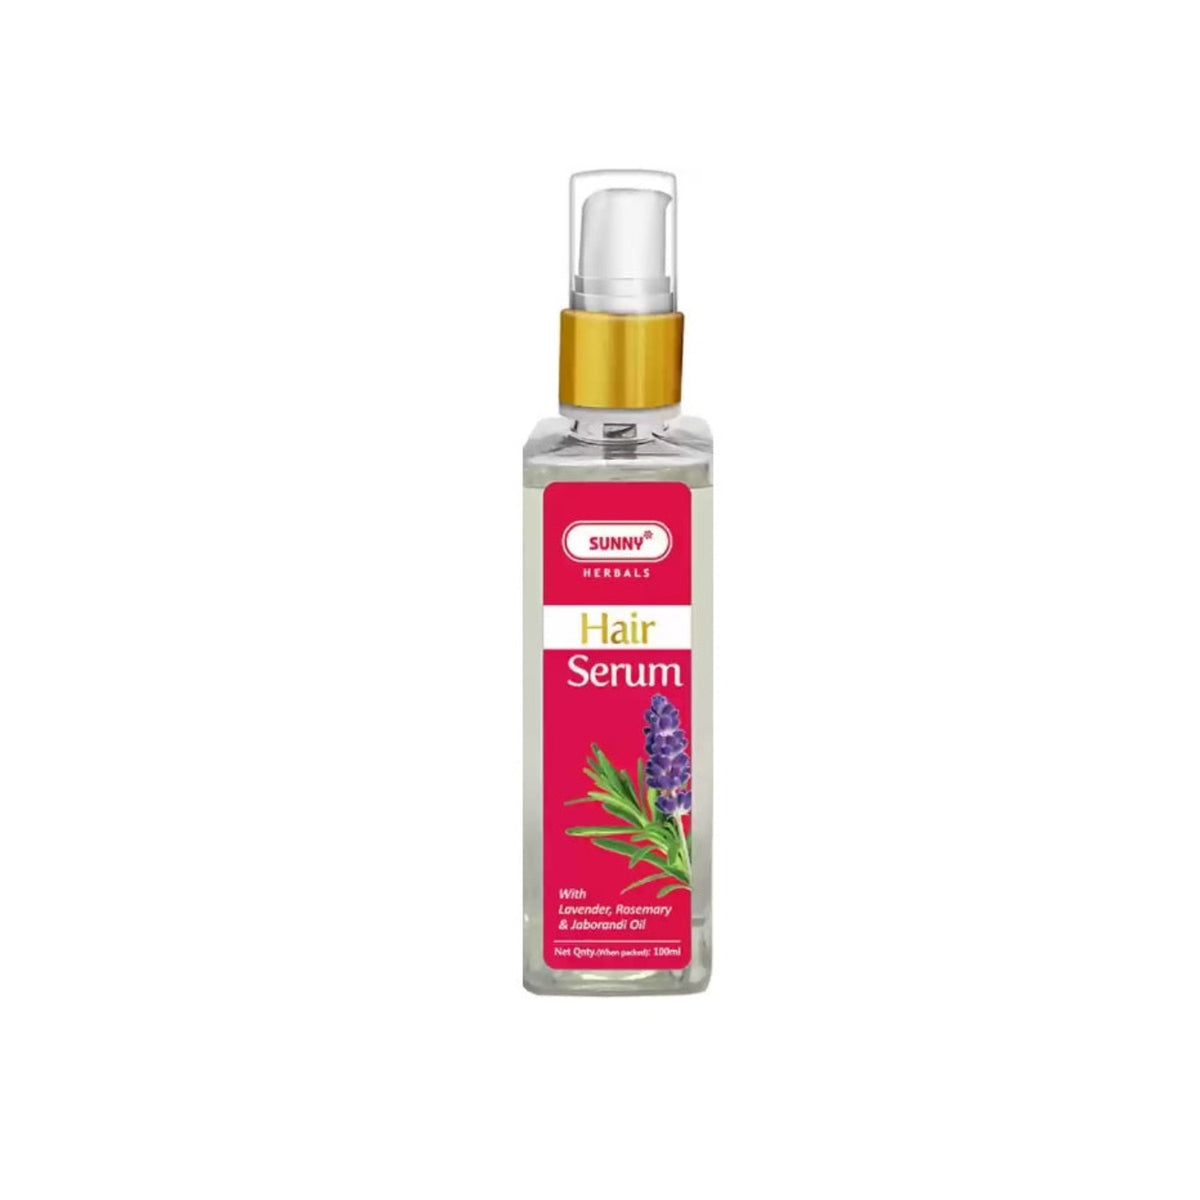 Bakson's Sunny Herbals Jaborandi Haarserum kontrolliert Haarausfall mit Lavendel, Rosmarin und Jaborandi-Öl, 100 ml